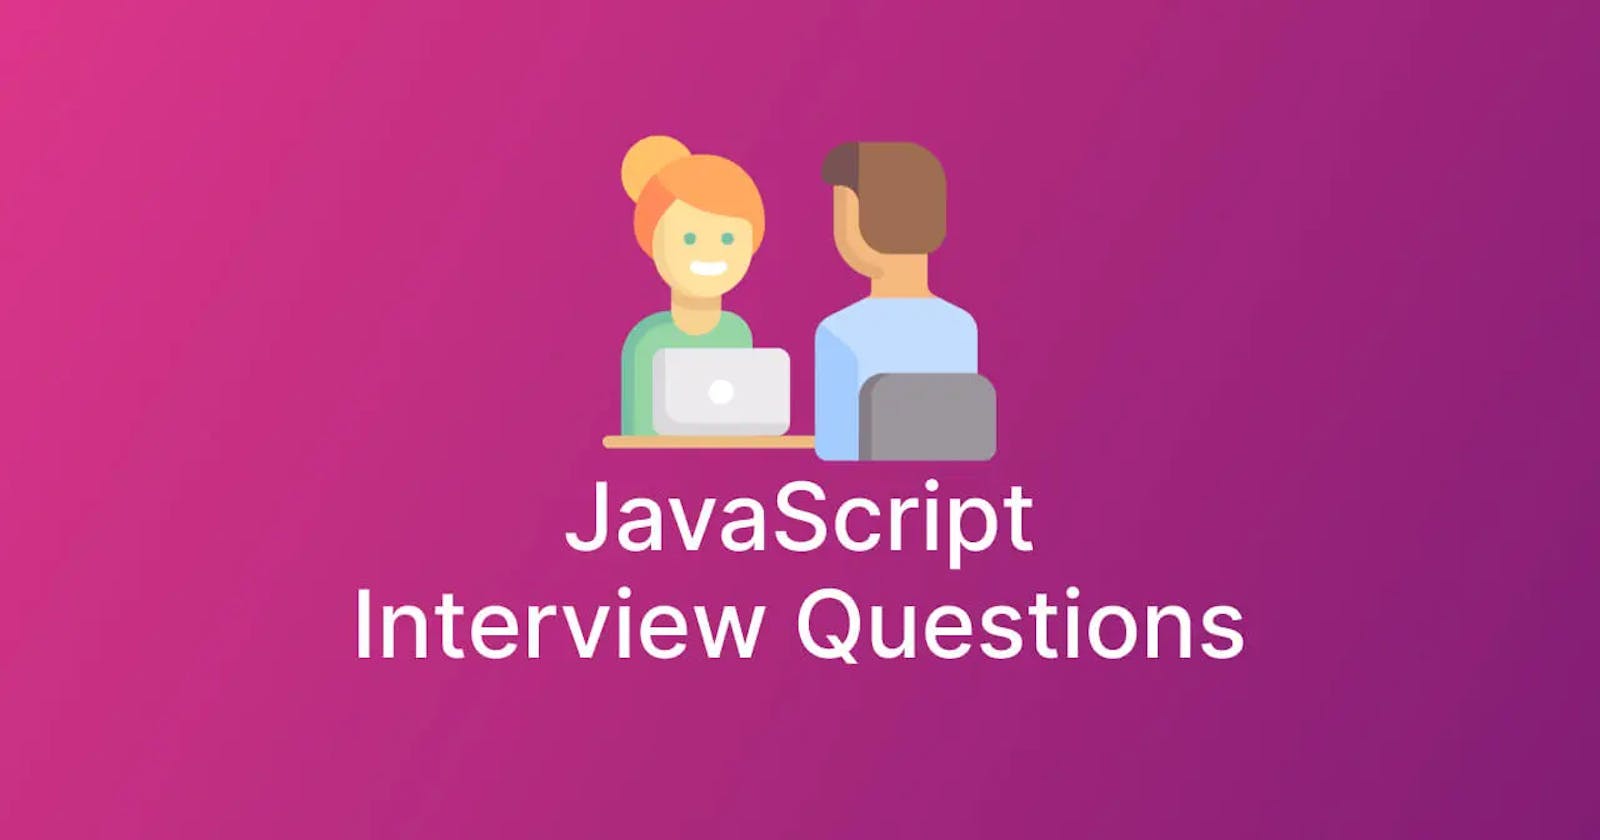 JavaScript Interview Preparation Cheatsheet